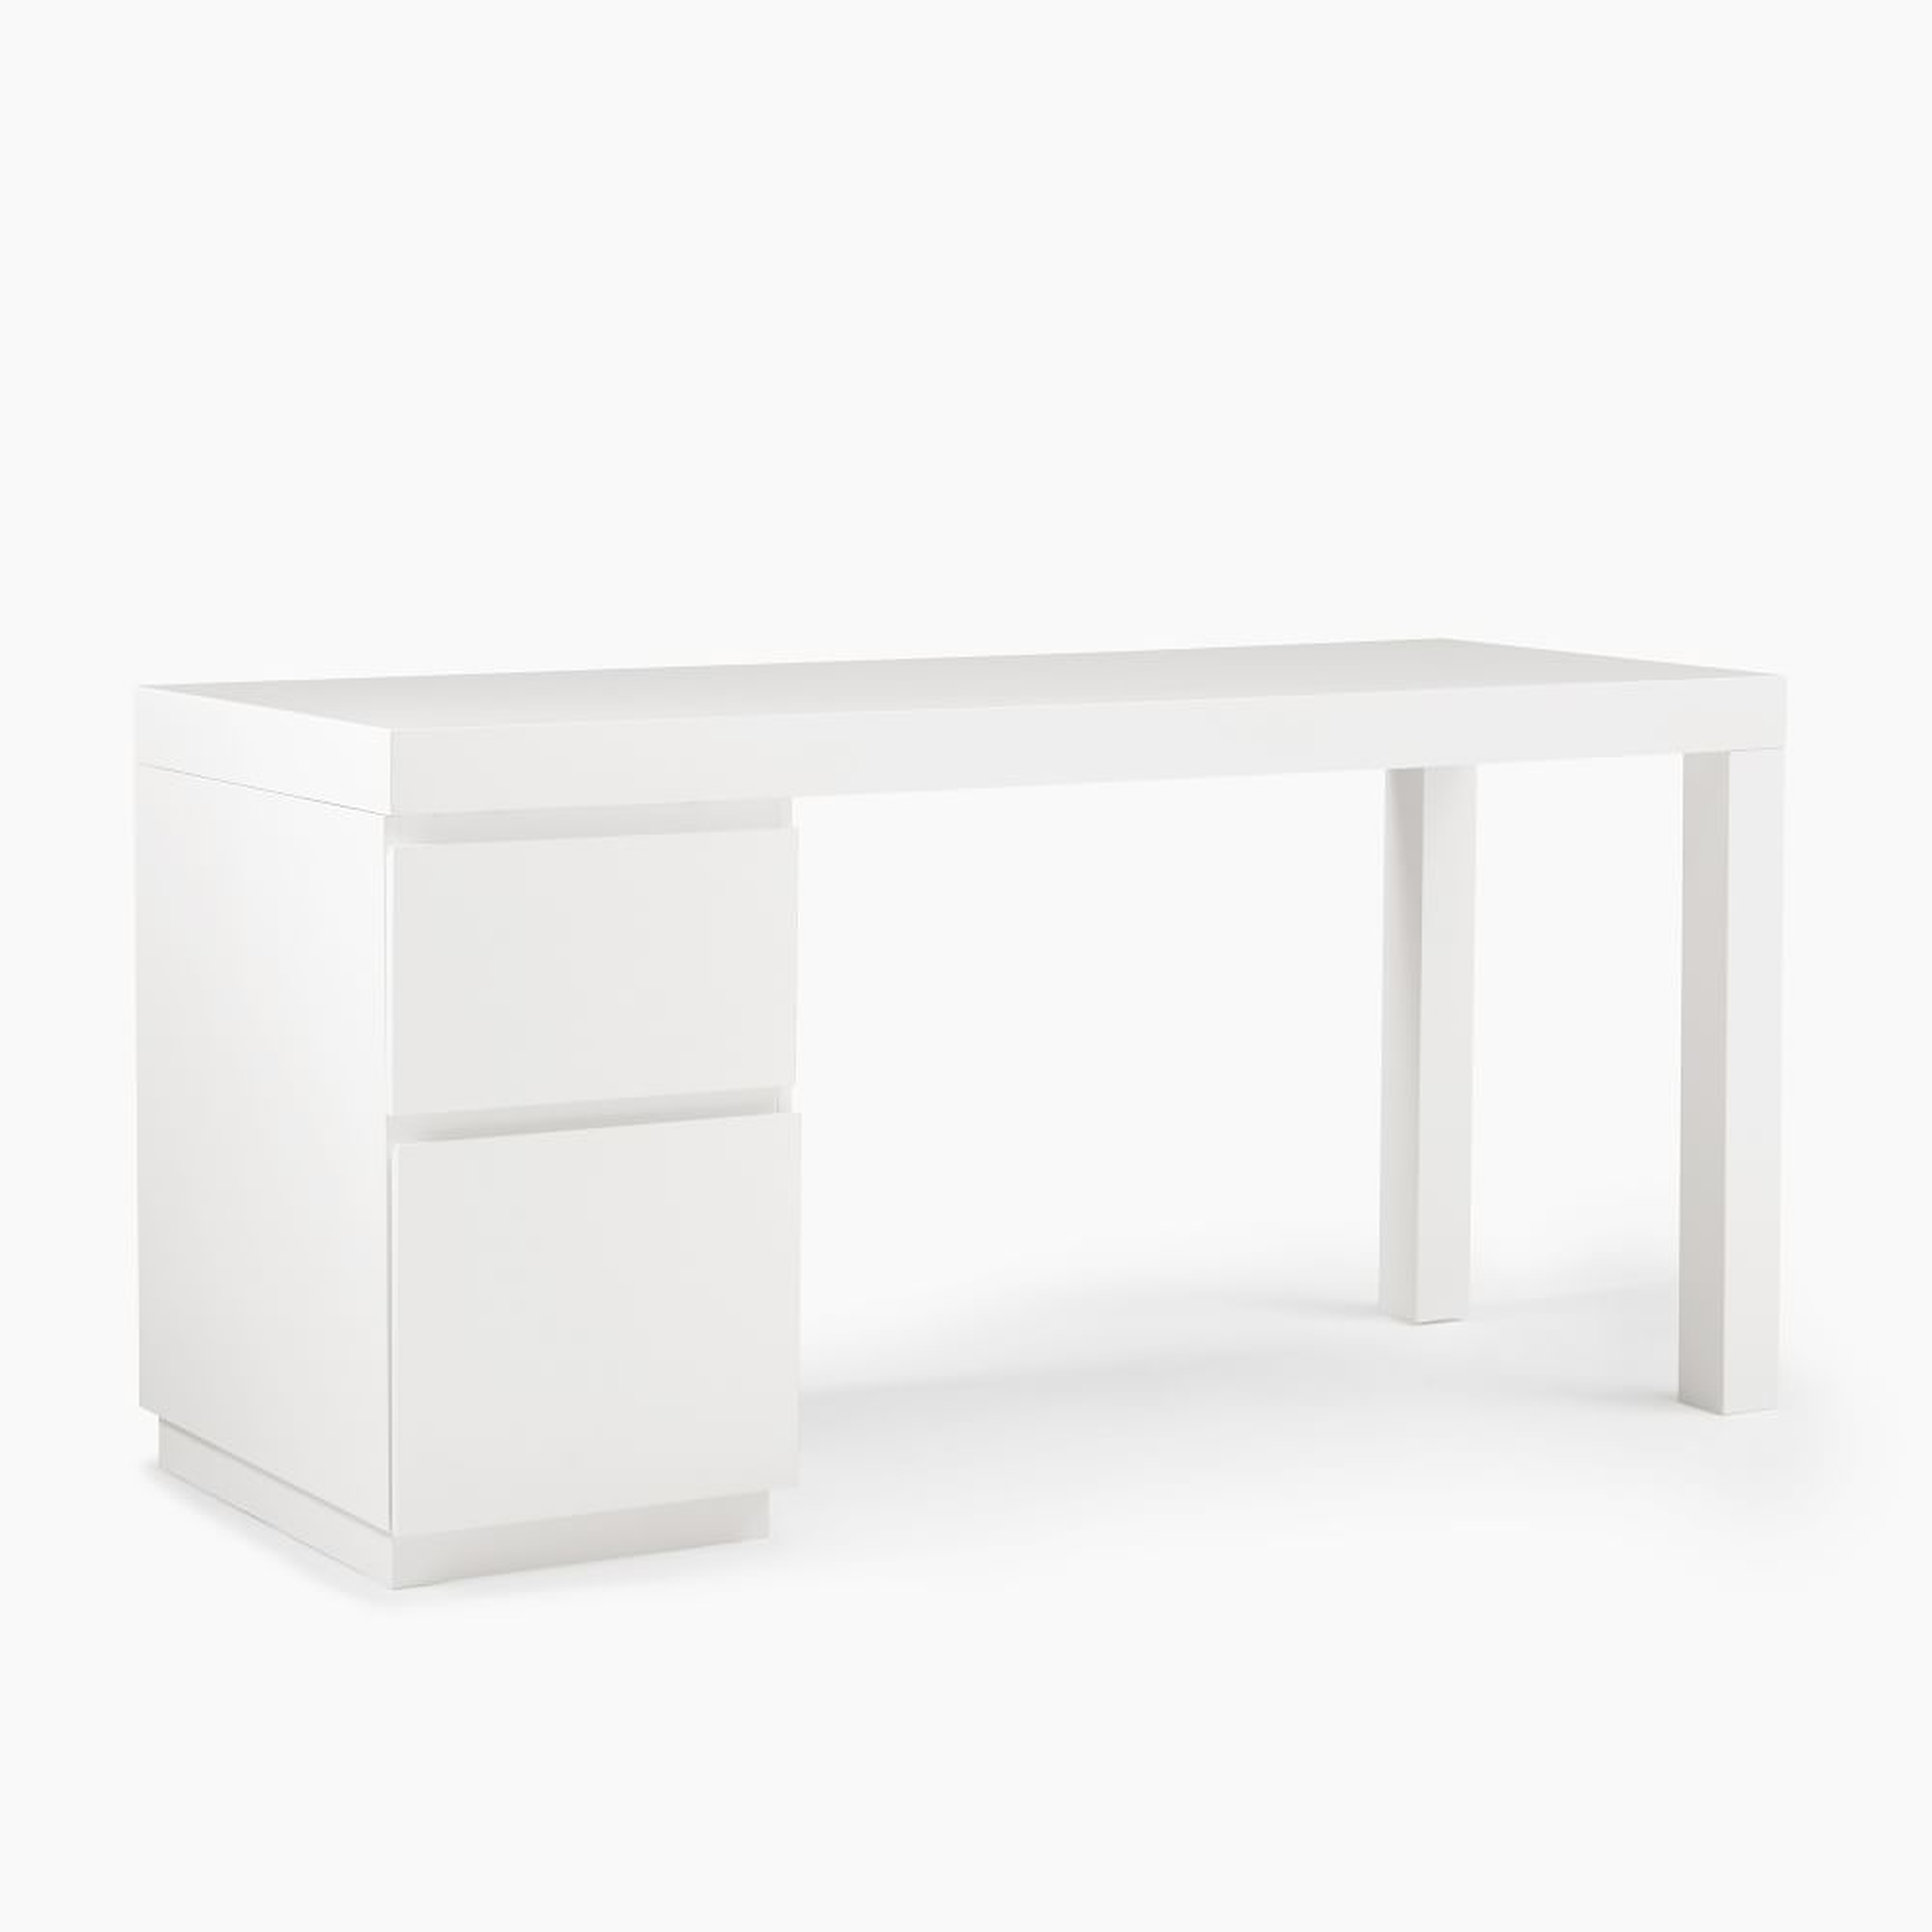 Parsons File Cabinet + Desk Set, White - West Elm